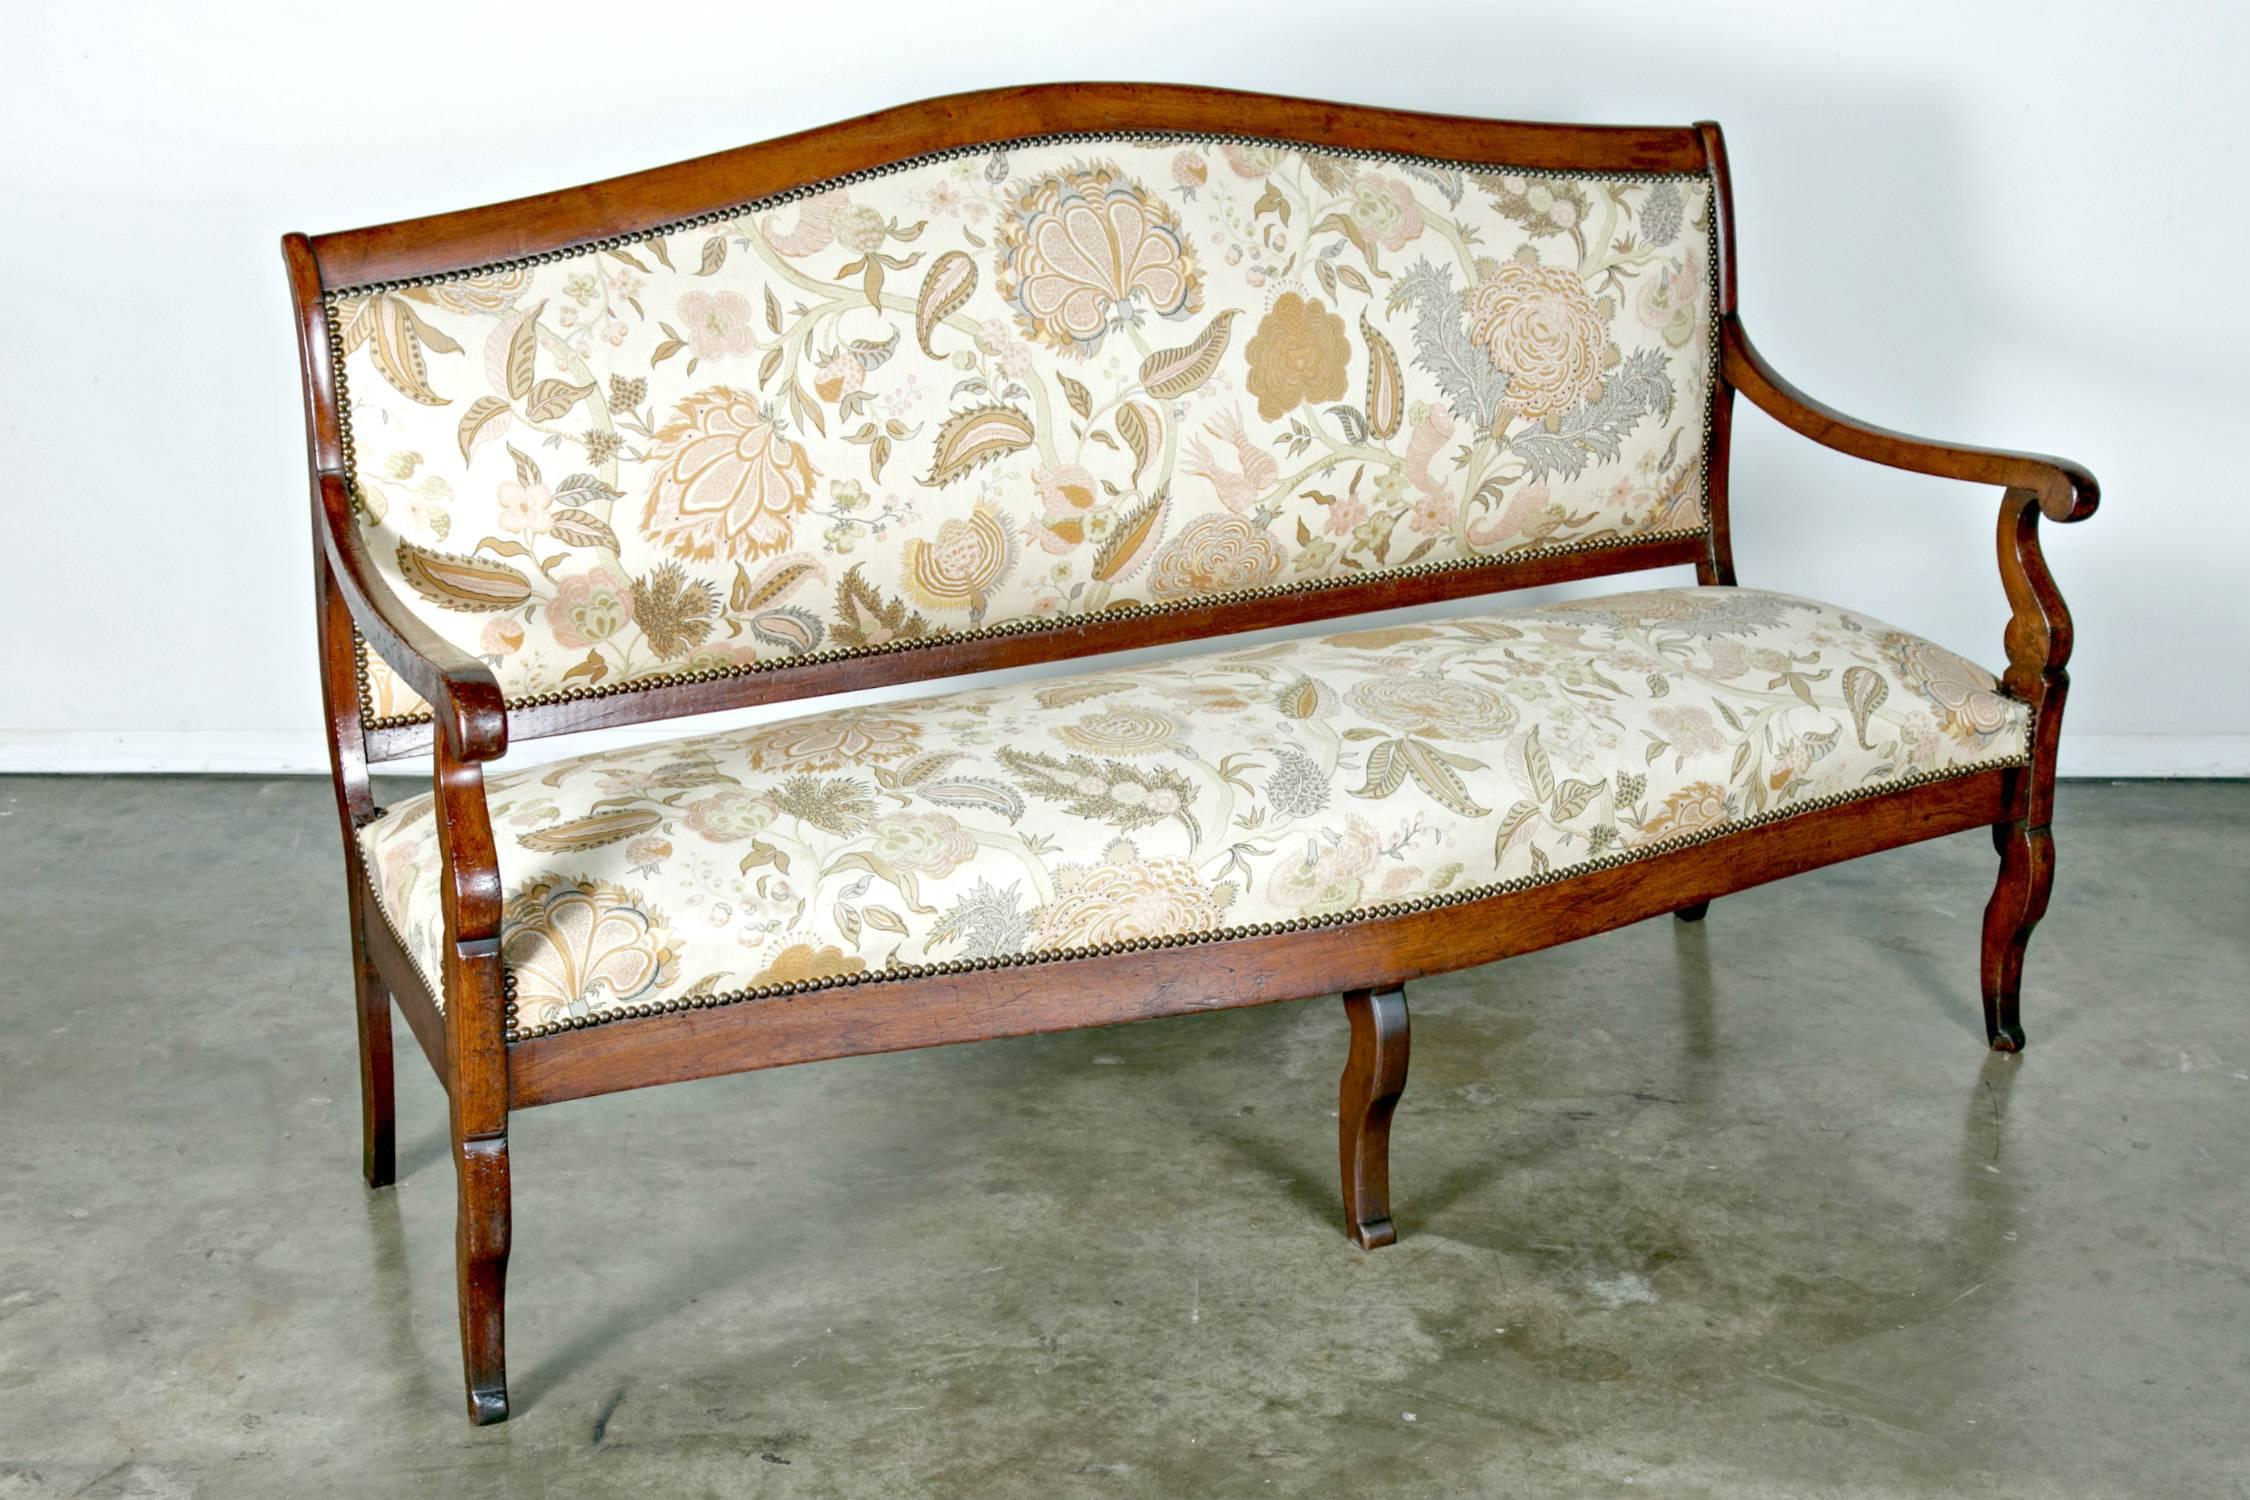 Early 19th Century French Restauration Period Walnut Sofa